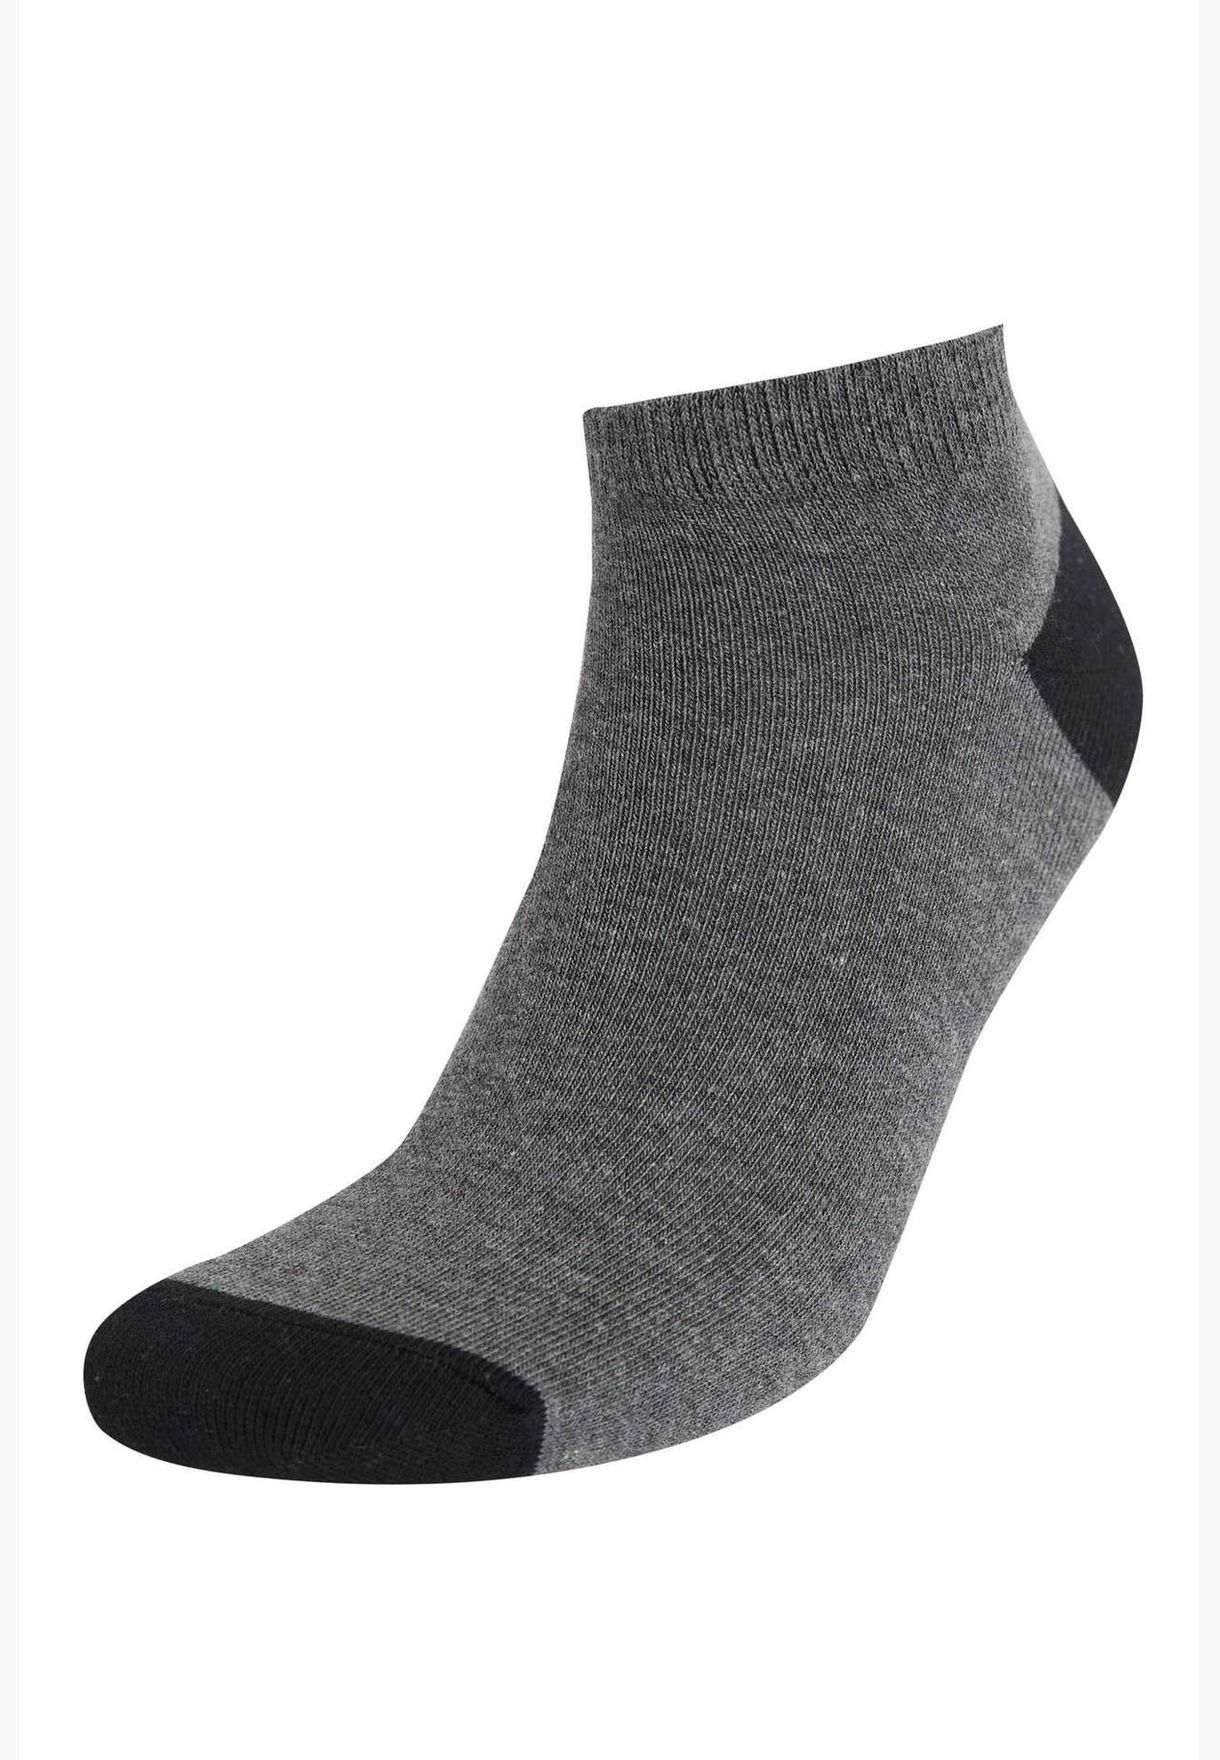 Patterned Low Cut Socks (5 Pack)